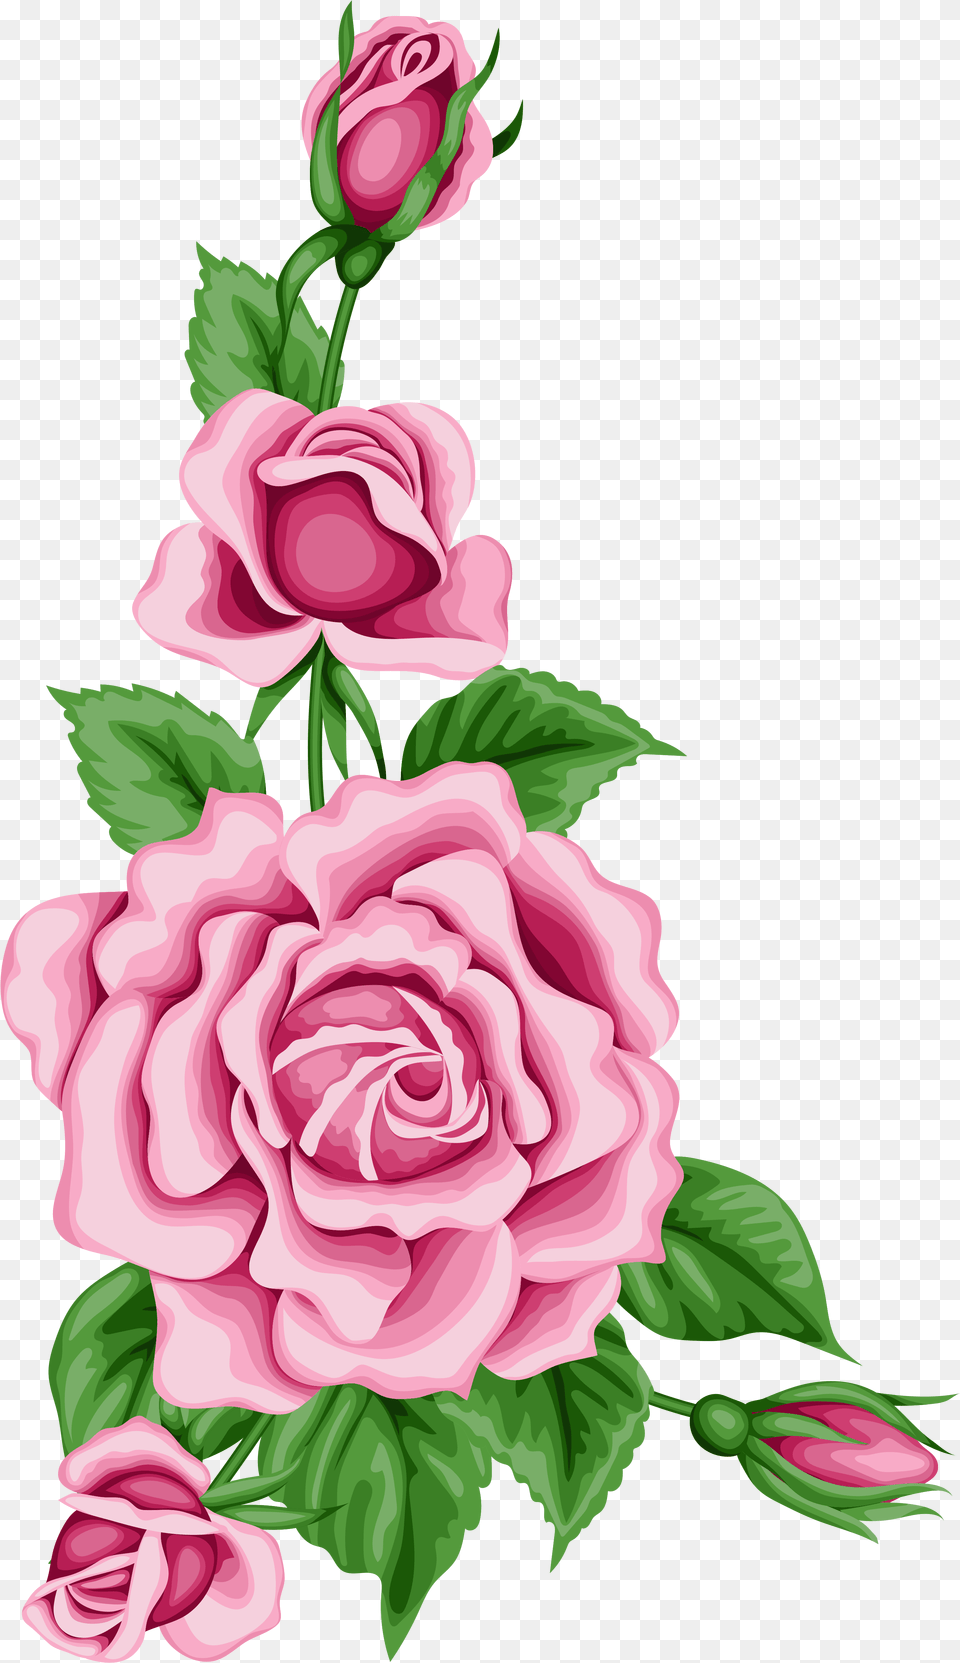 Roses Decoration Clipart Image Flower Rose Flower Border Clipart, Art, Graphics, Plant, Pattern Free Transparent Png